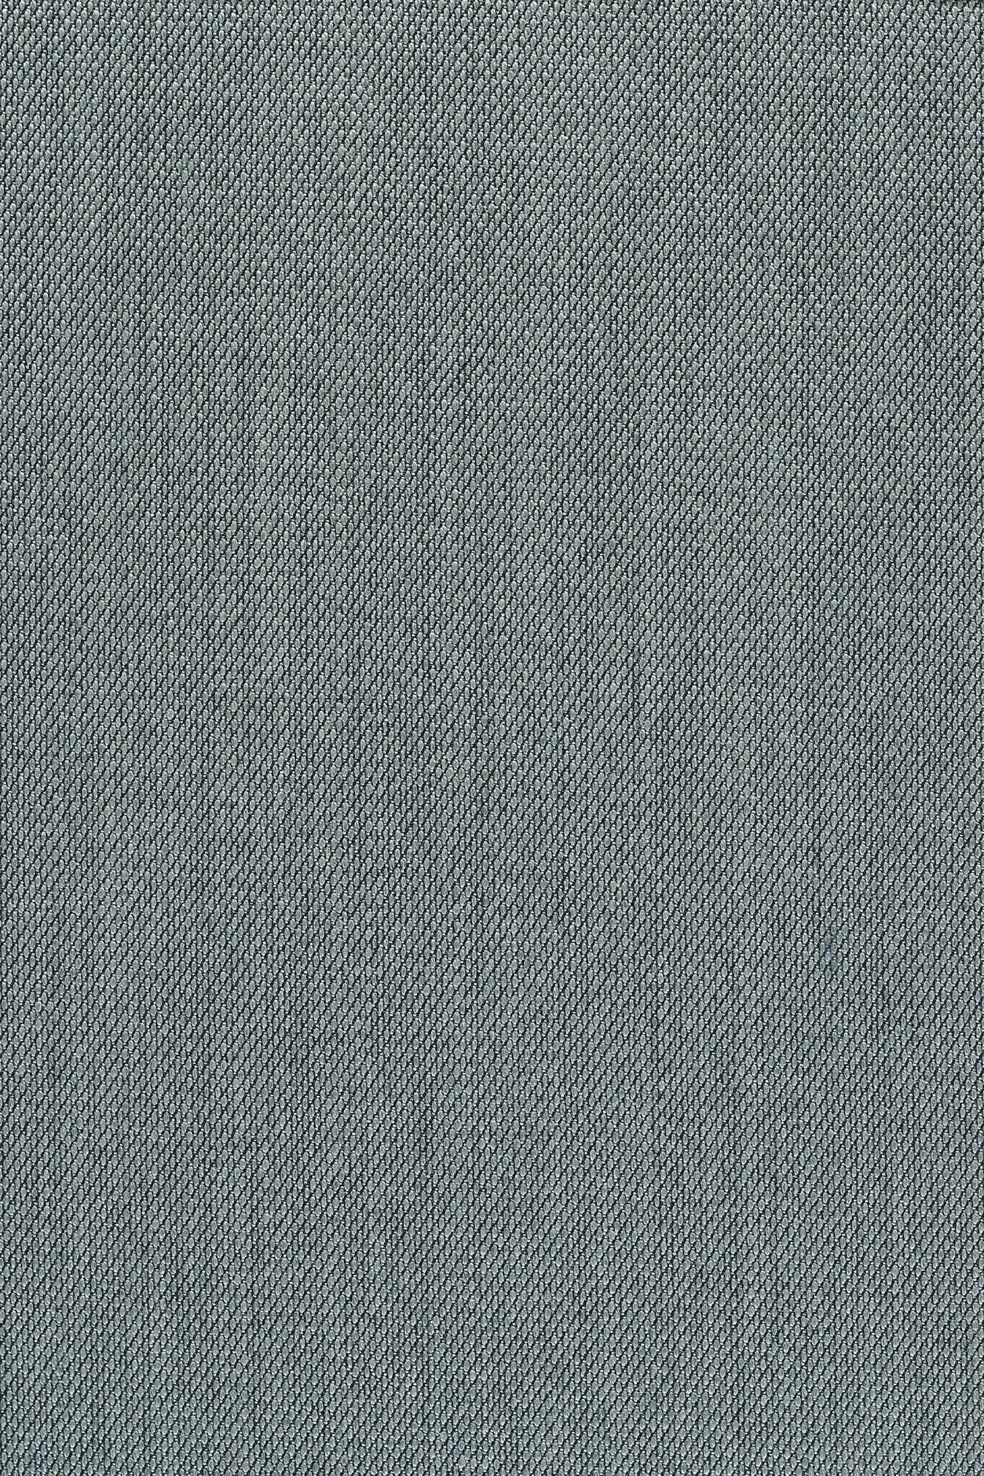 Fabric sample Steelcut Trio 3 153 grey